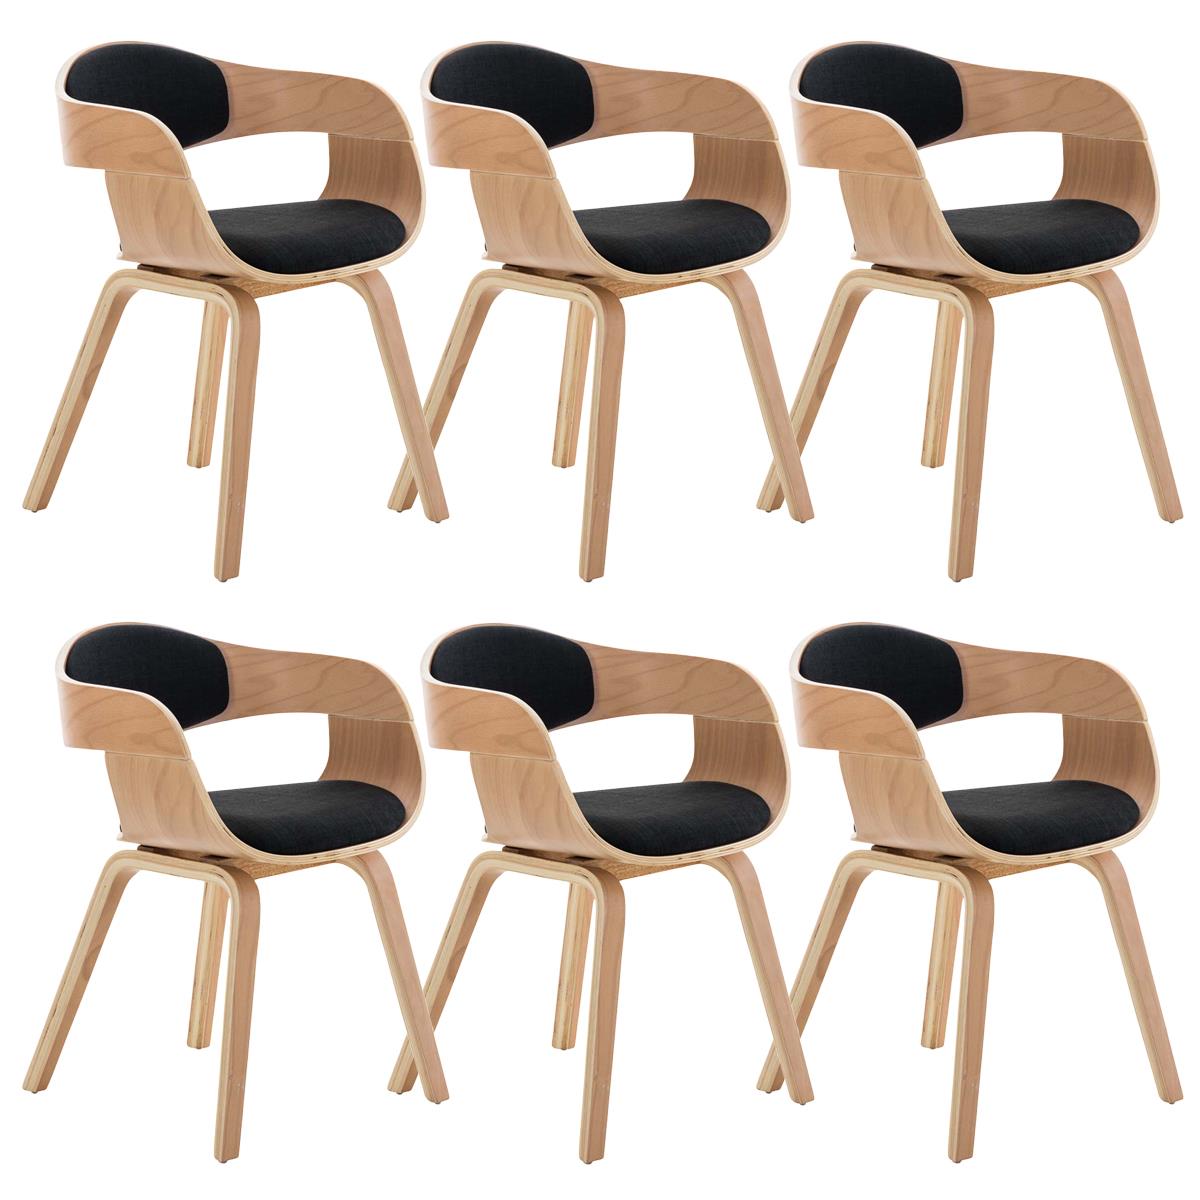 Lote de 6 sillas de Comedor BOLONIA, en Tela Negra, Estructura de Madera color Natural